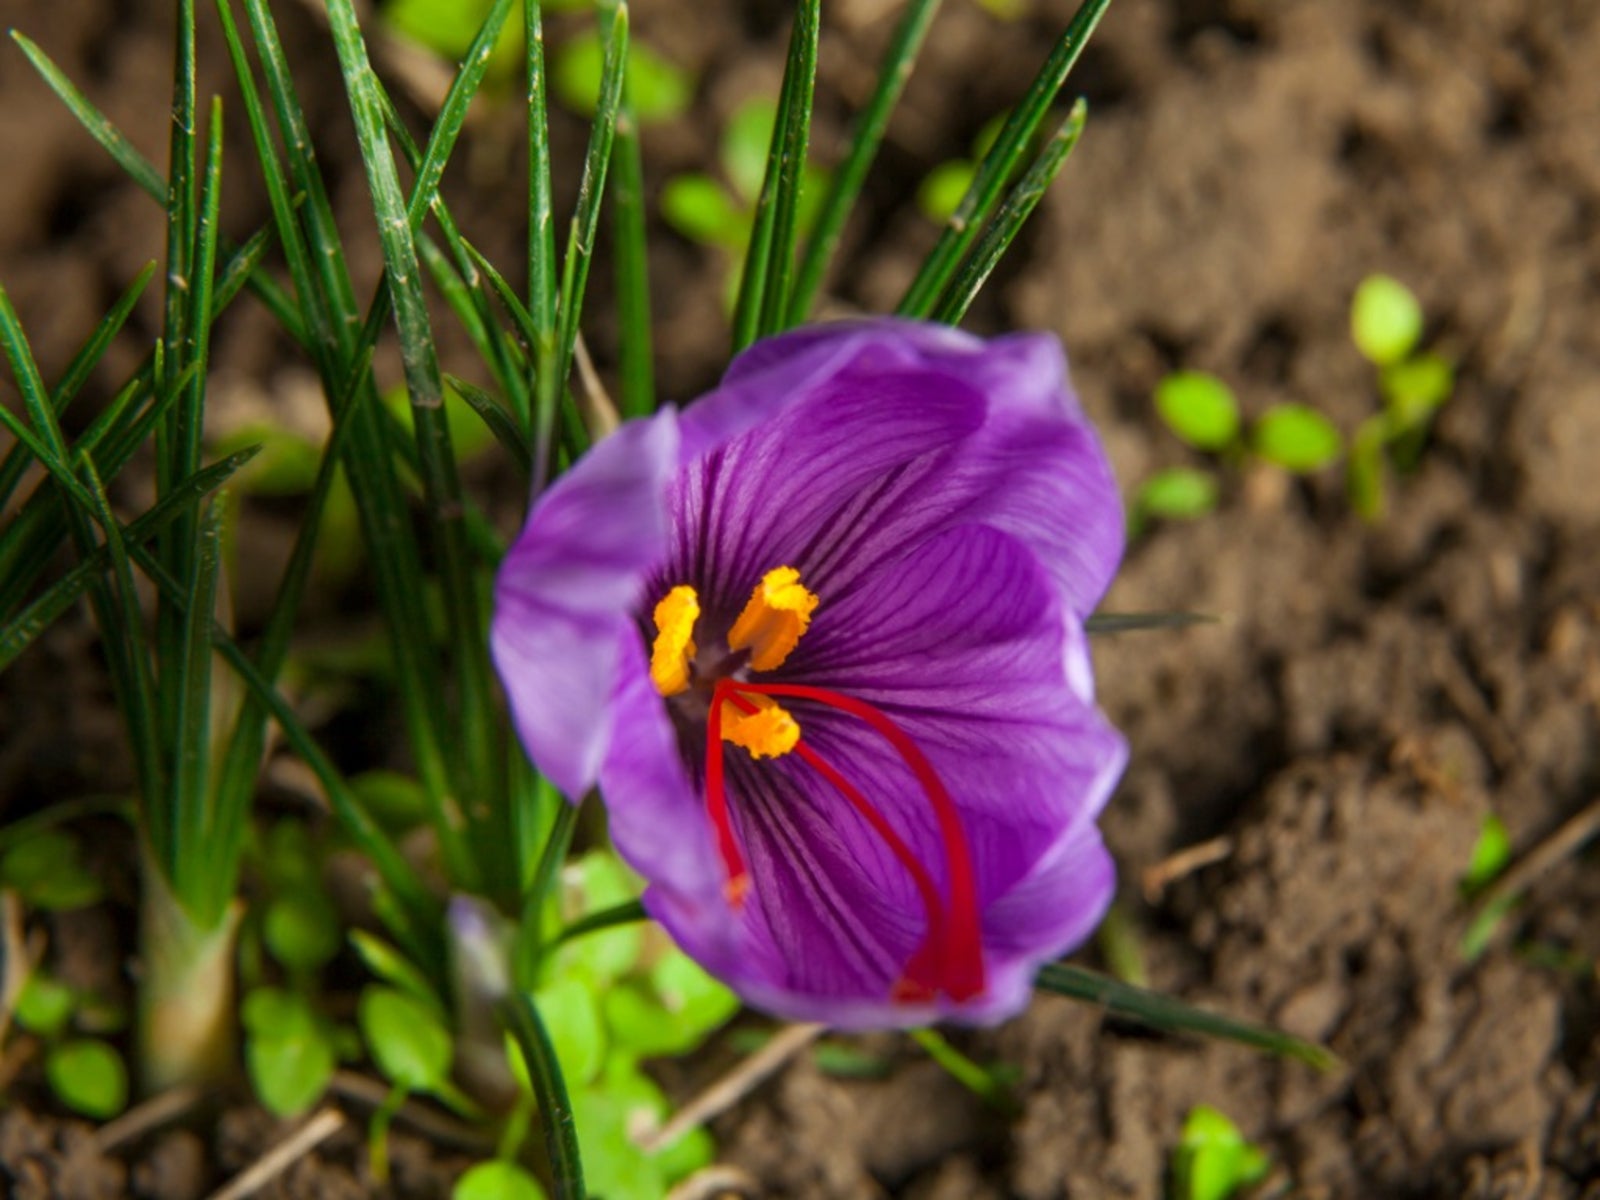 Growing Saffron: How To Grow Saffron Crocus Bulbs